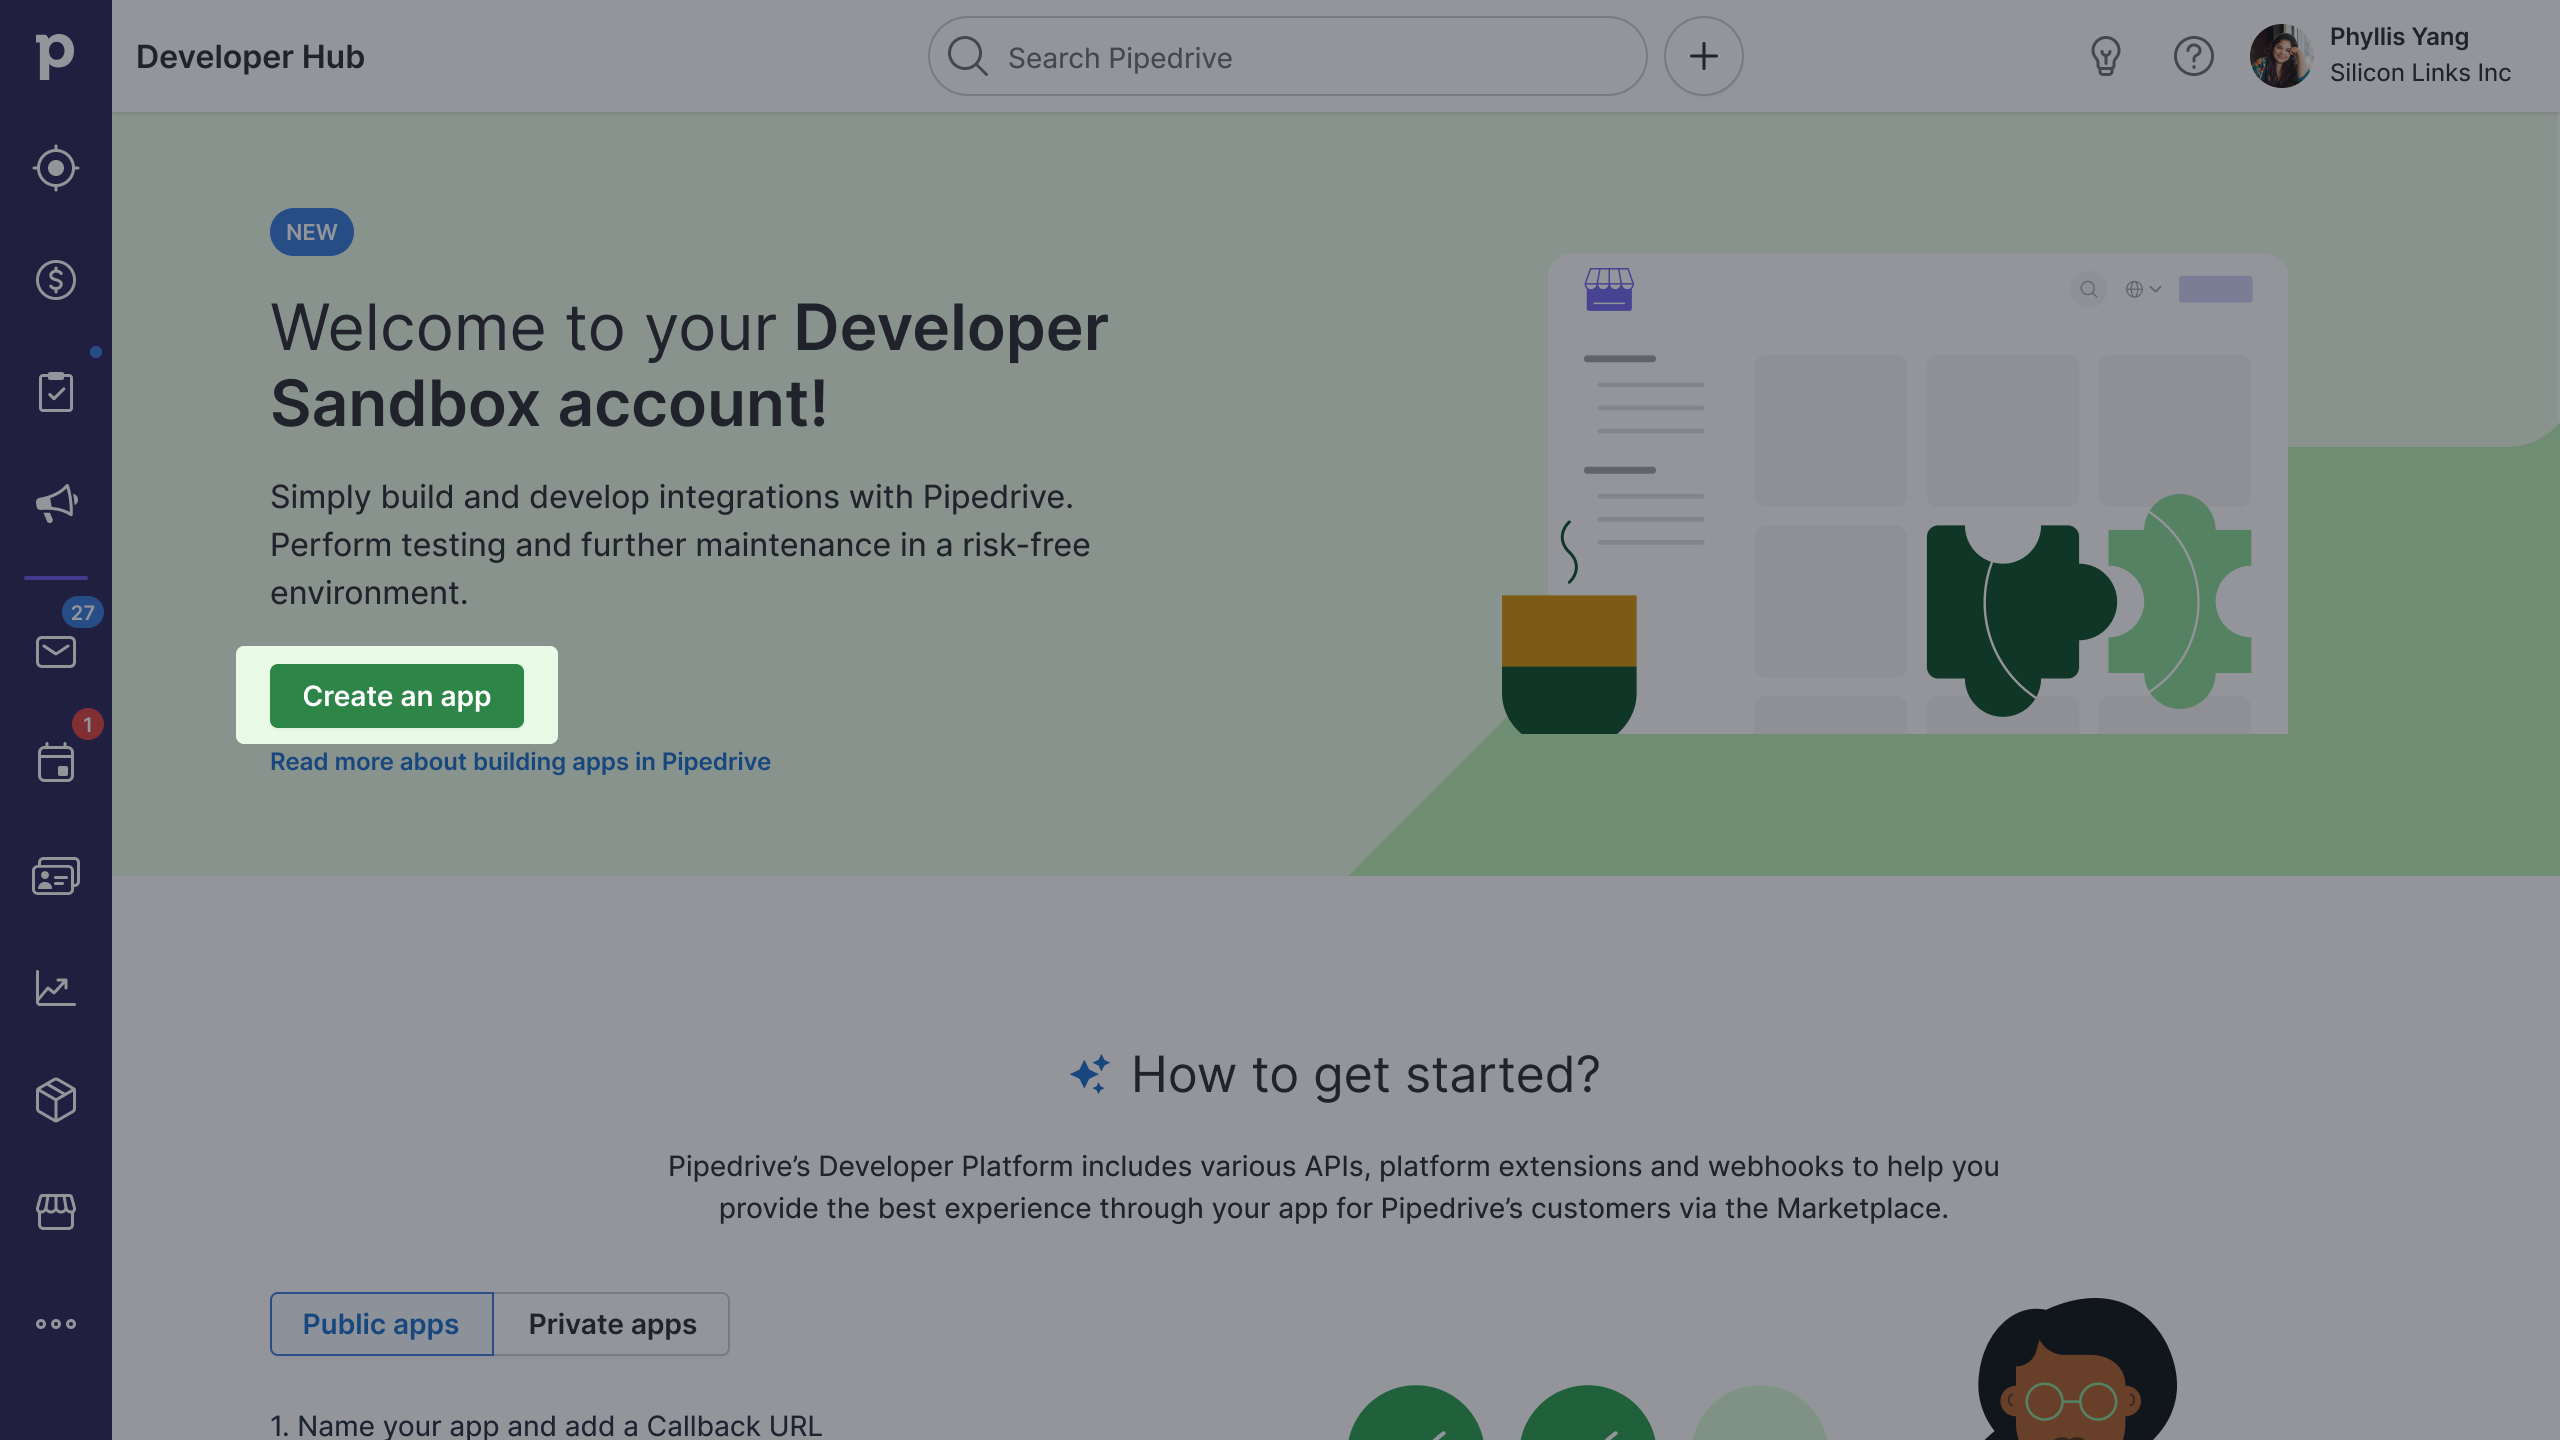 Create an app in Developer Hub